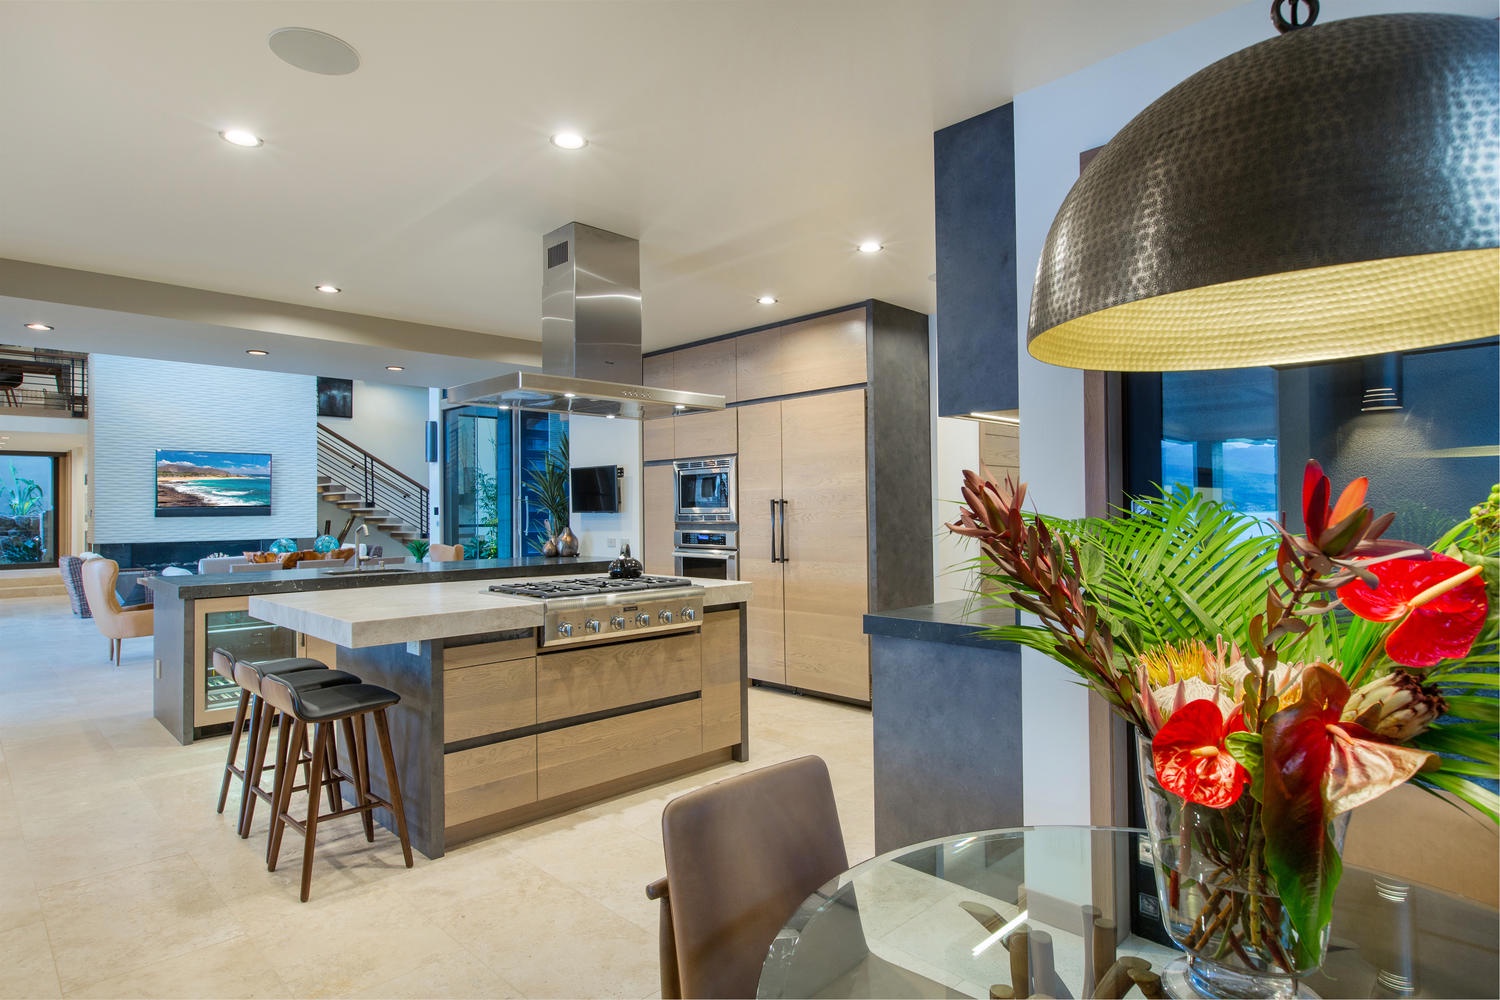 Honolulu Vacation Rentals, Maunalua Bay Estate 4 Bedroom - Kitchen nook